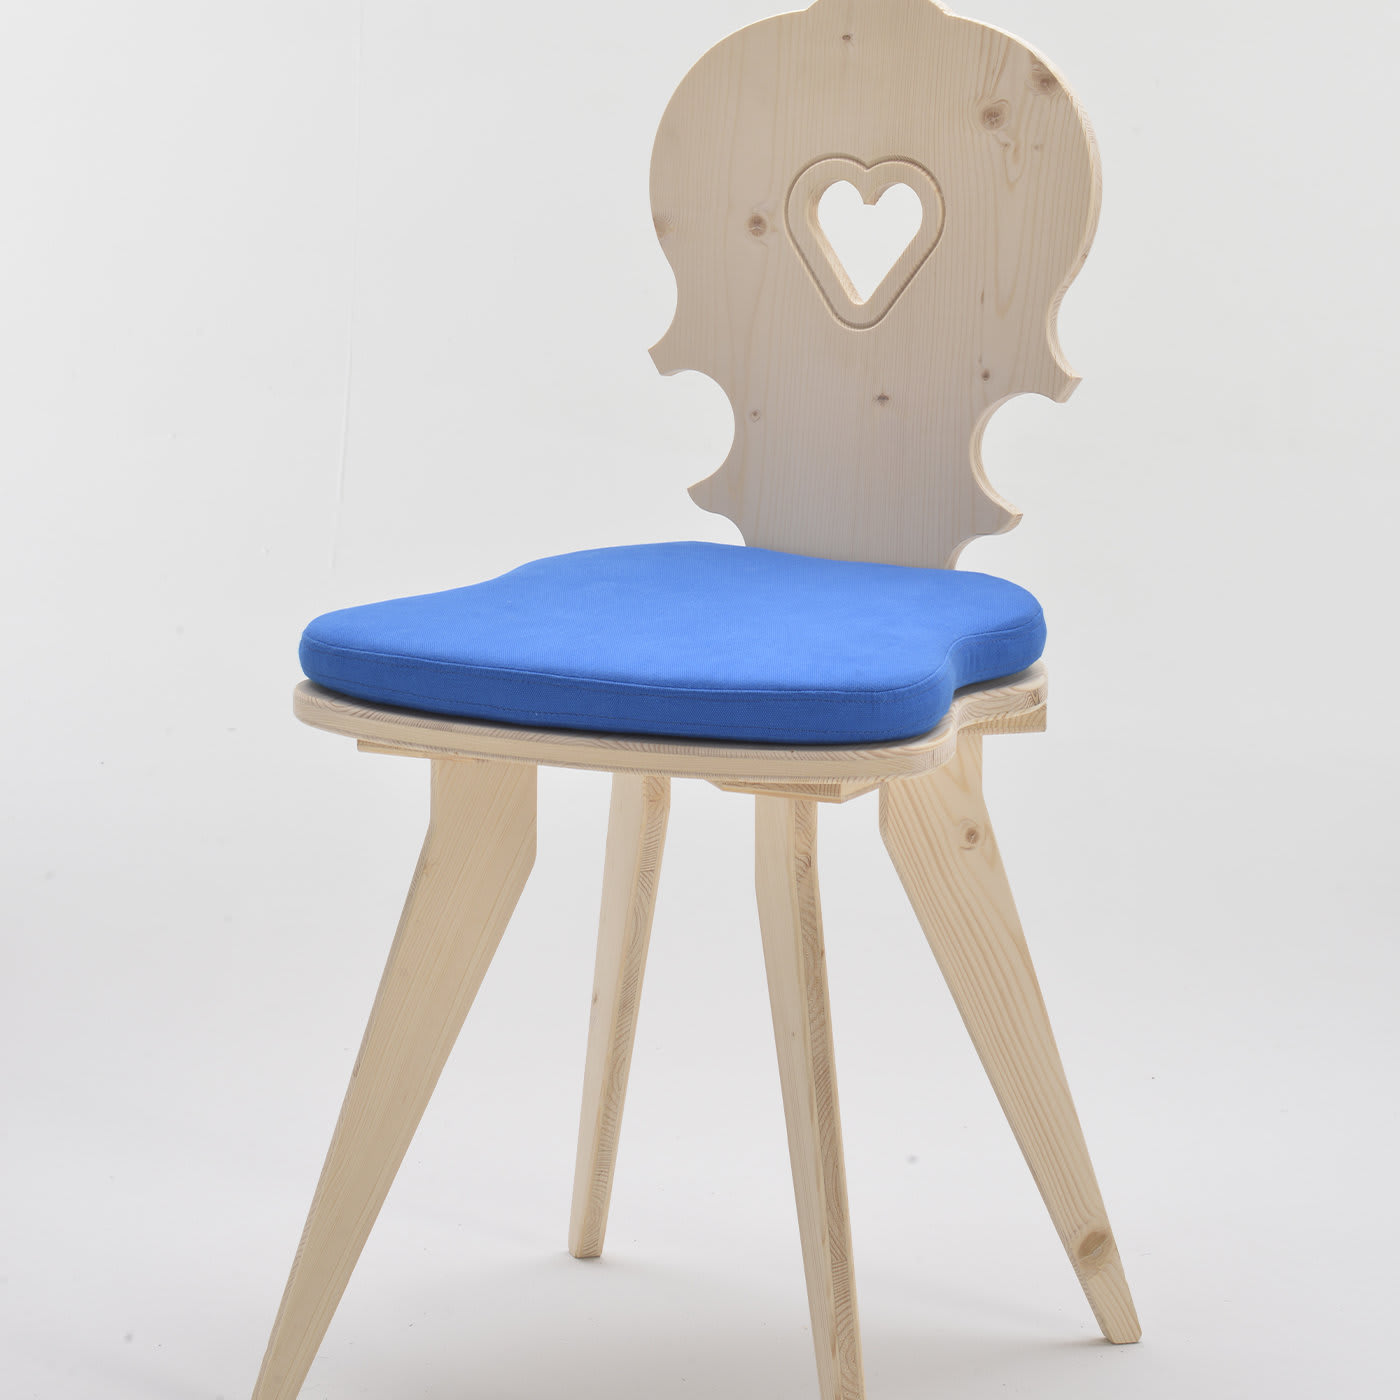 South Tyrol Chair with Cushion - Andrea de Chirico